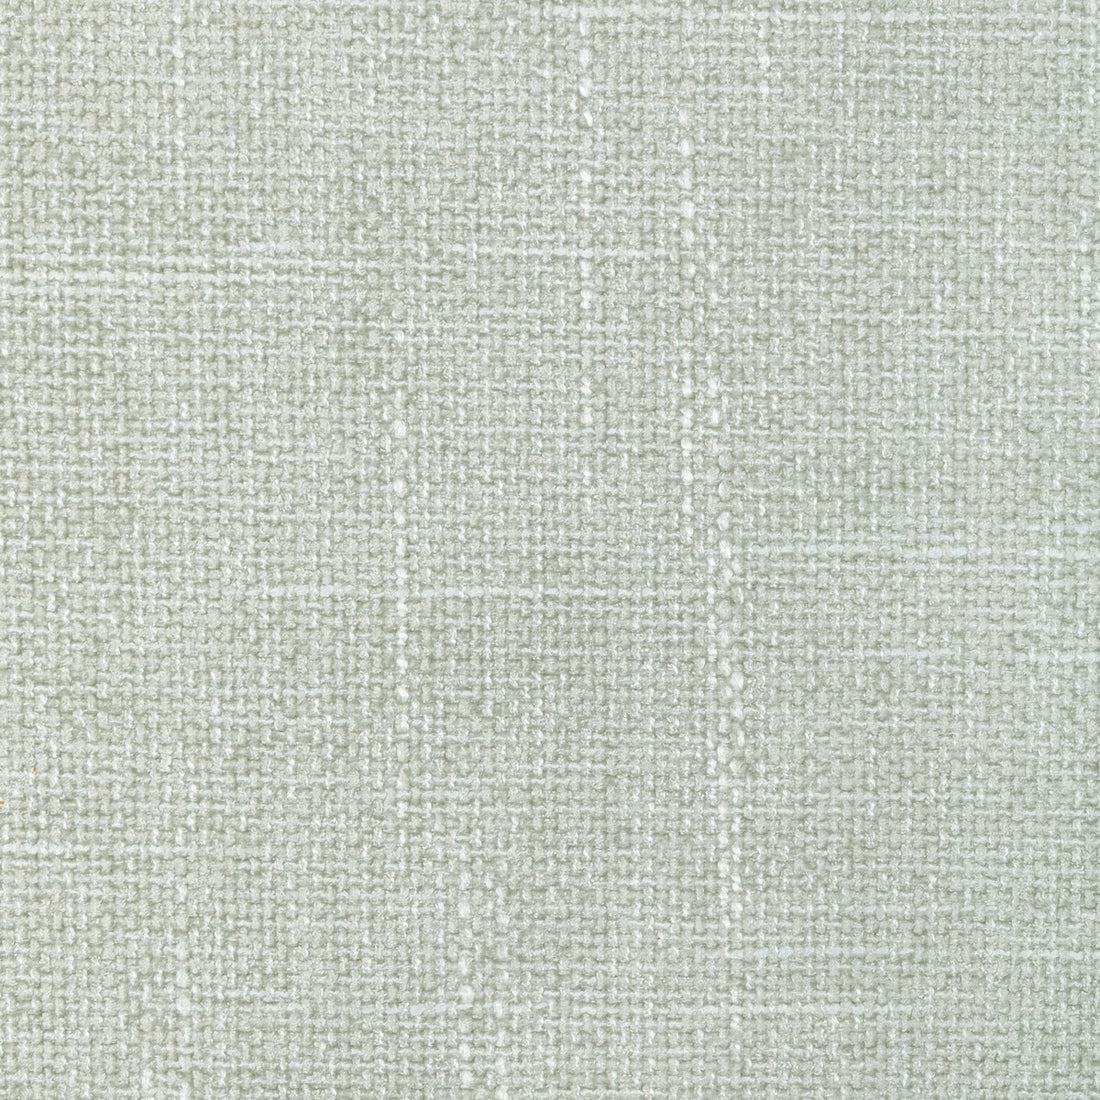 Kravet Smart fabric in 36579-130 color - pattern 36579.130.0 - by Kravet Smart in the Performance Kravetarmor collection